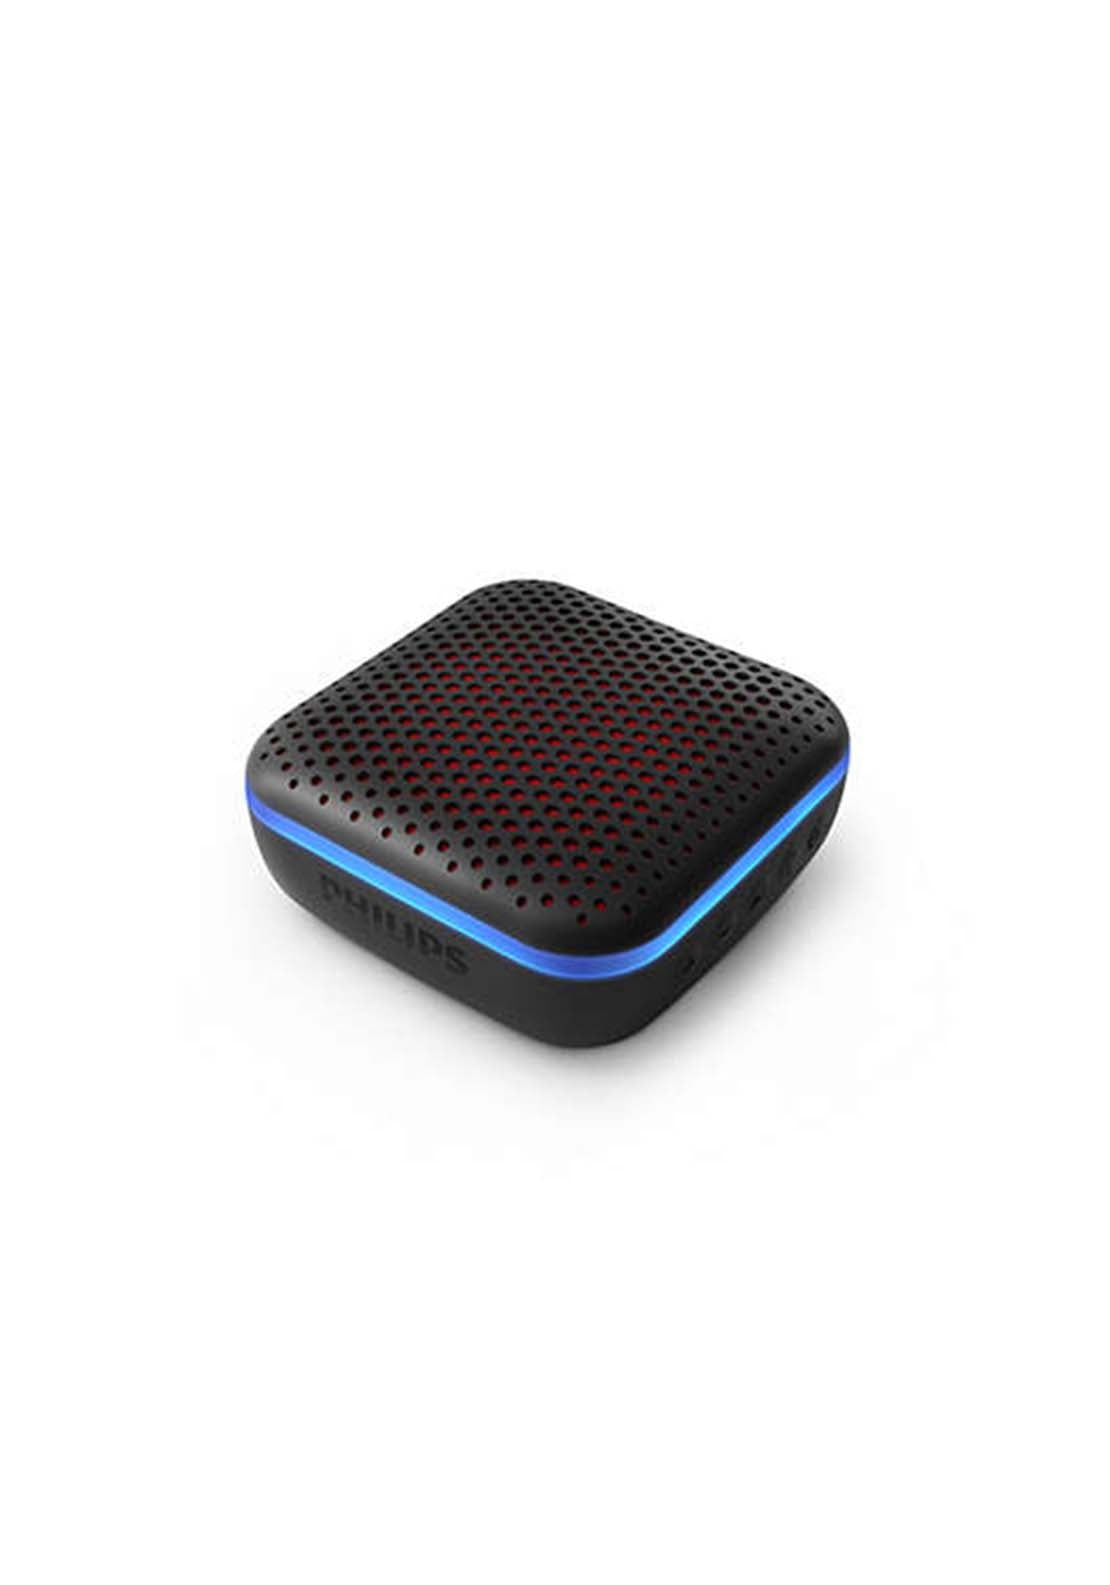 Philips Bluetooth Speaker | Tas2505B00 1 Shaws Department Stores